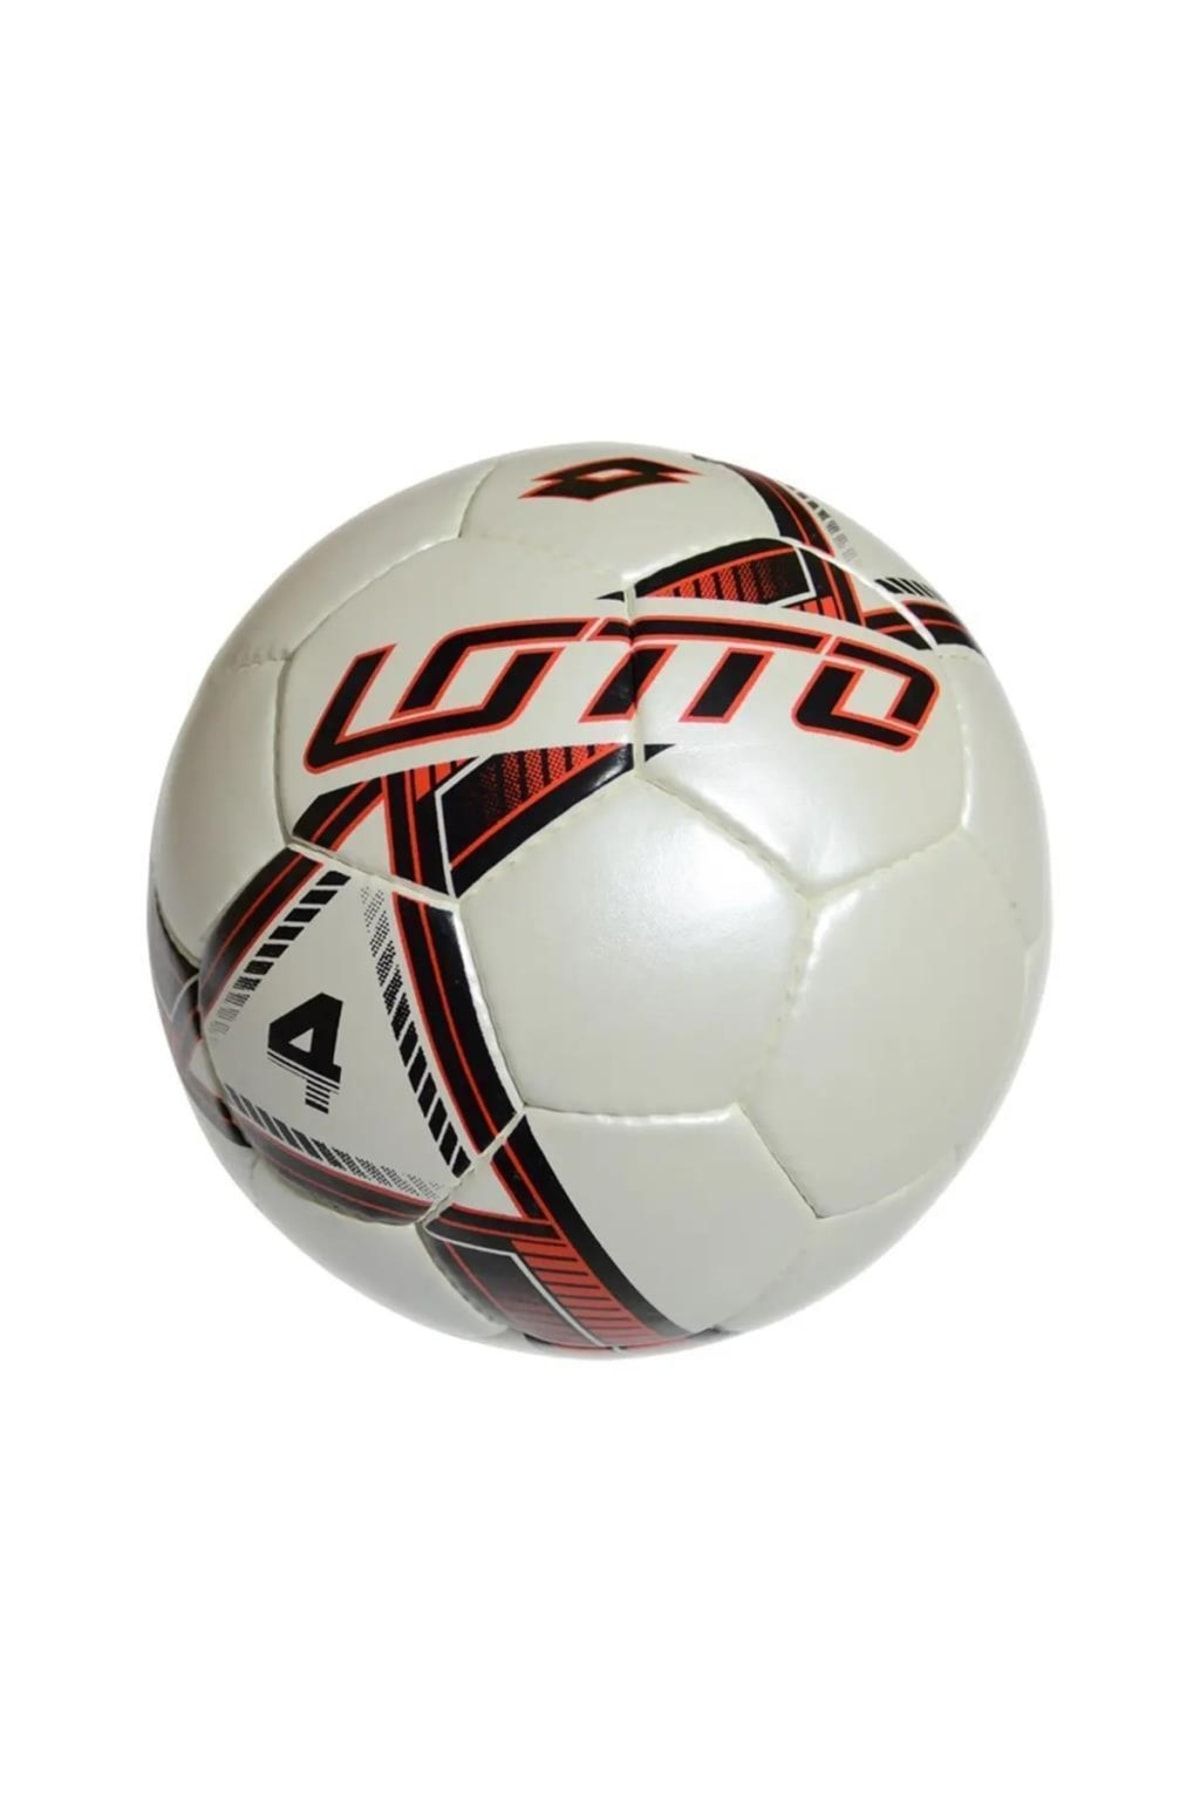 Lotto N7141 4 Numara Futbol Topu